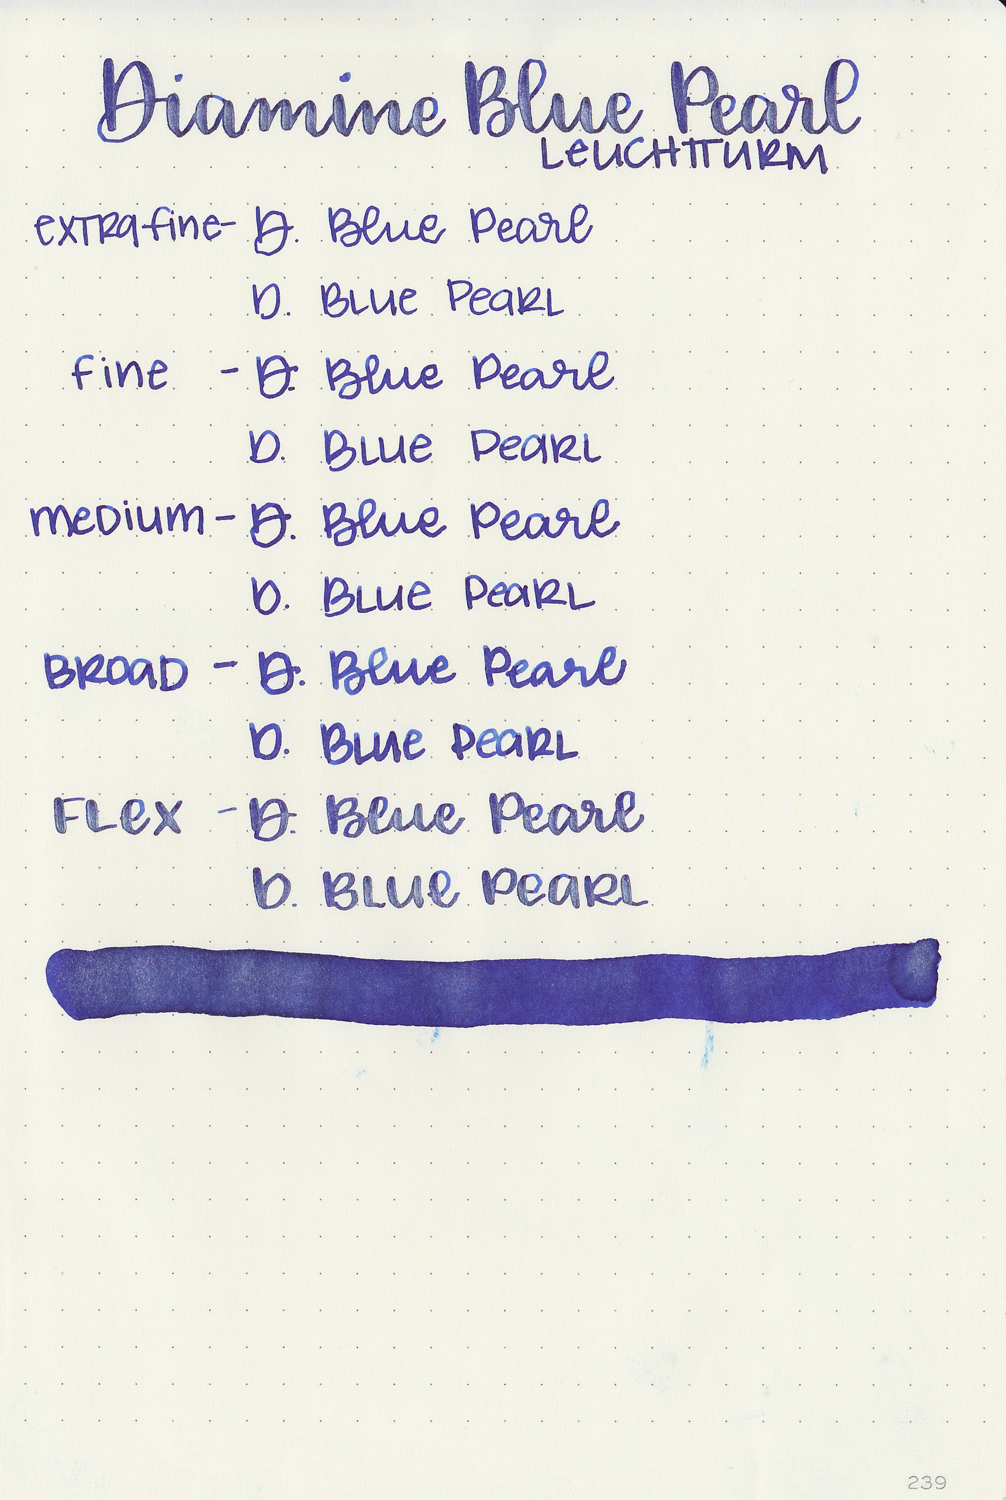 d-blue-pearl-9.jpg